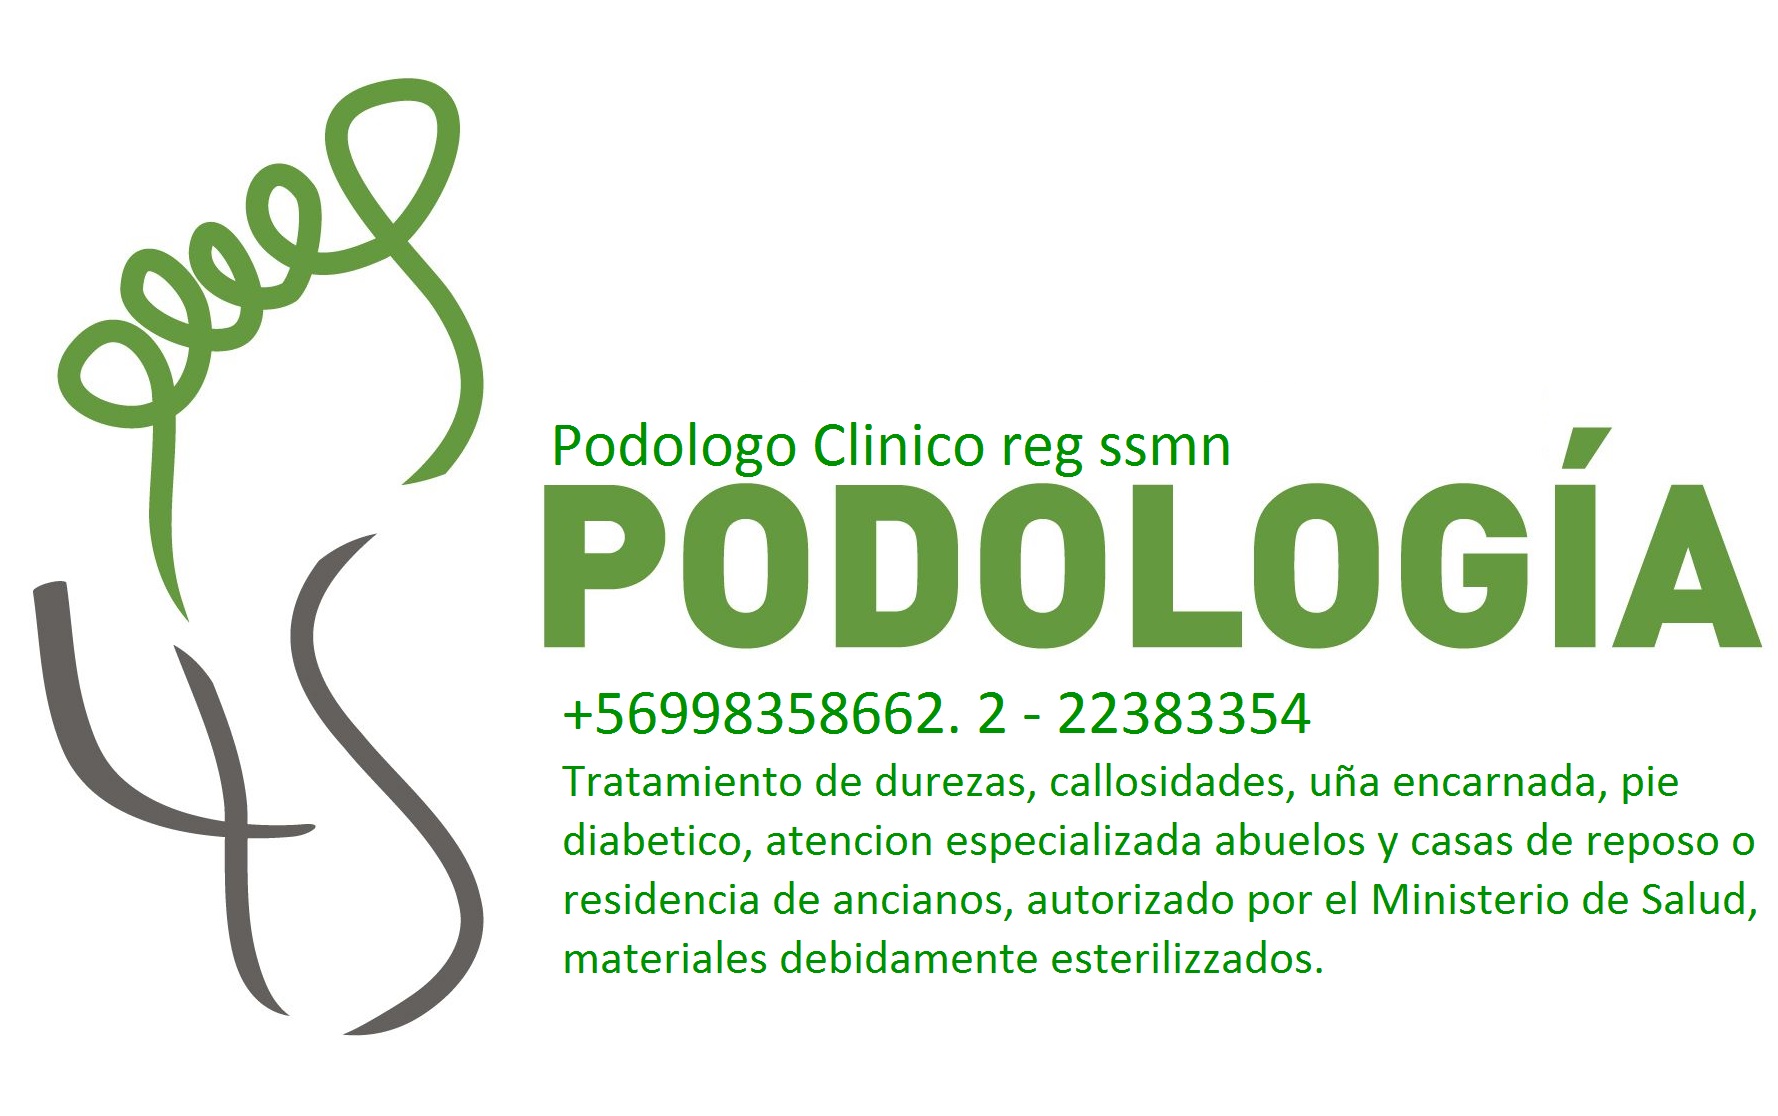 PODOLOGIA  MACUL CLINICA +569 98358662 2-22383354